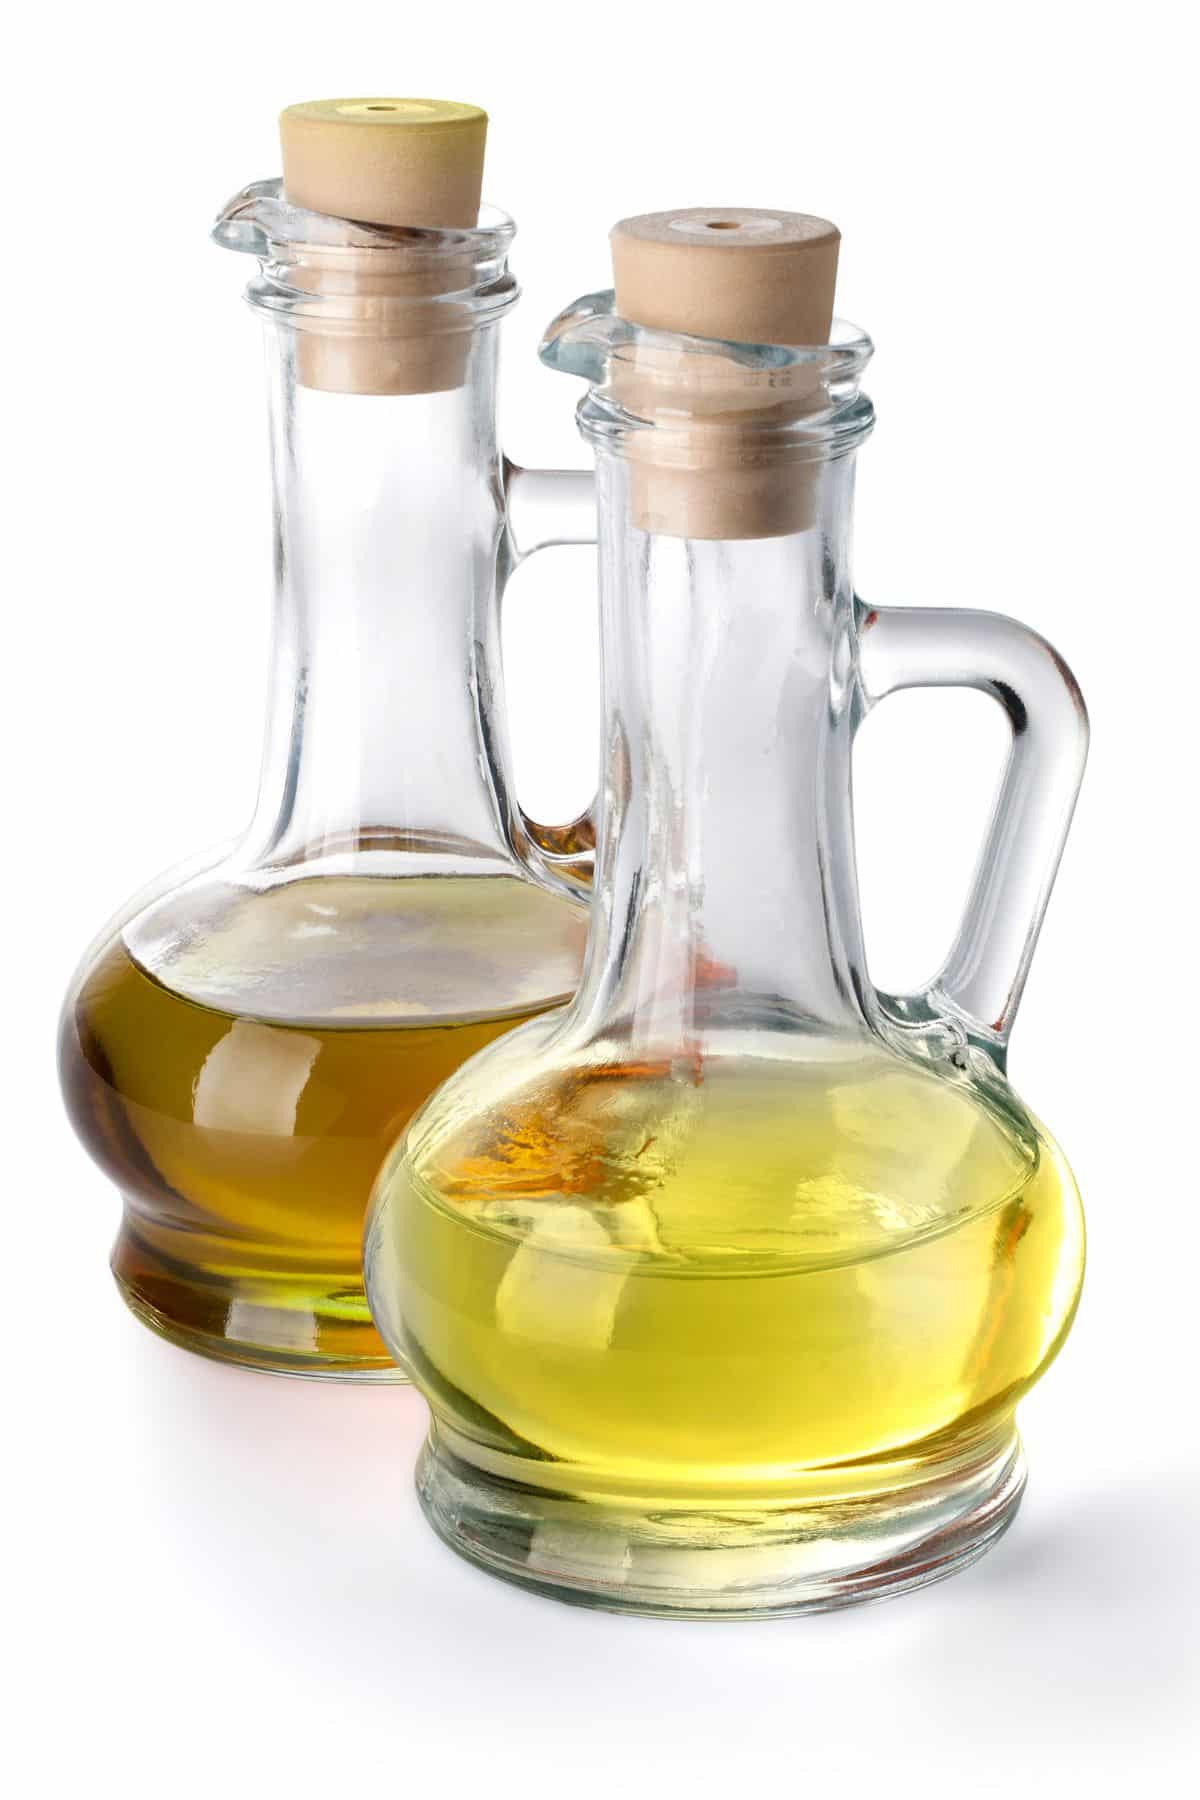 Bottle of olive oil next to bottle of vegetable oil.